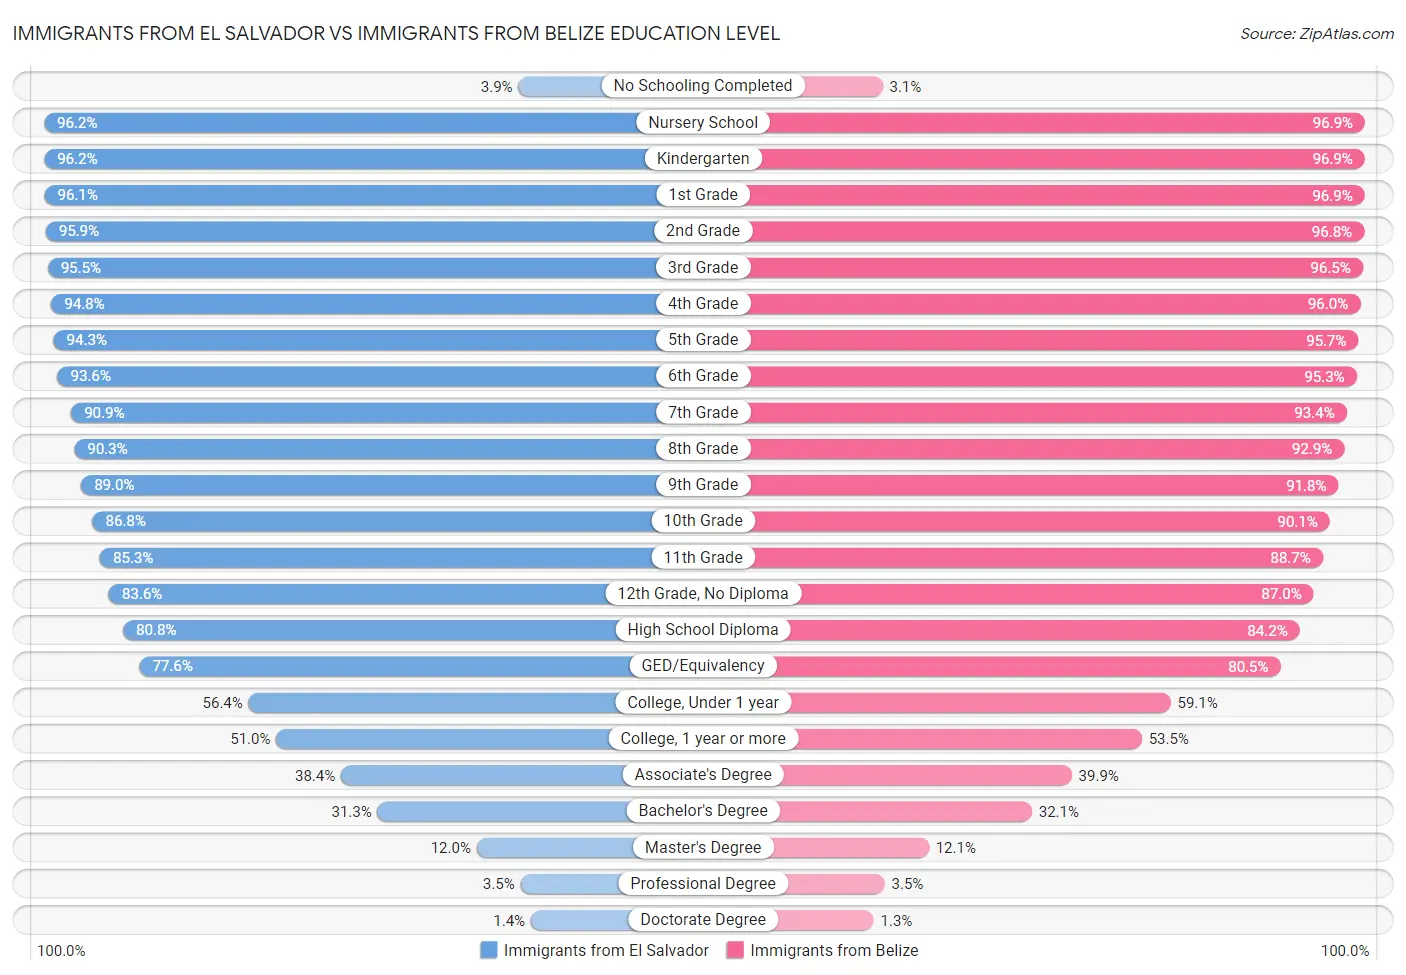 Immigrants from El Salvador vs Immigrants from Belize Education Level